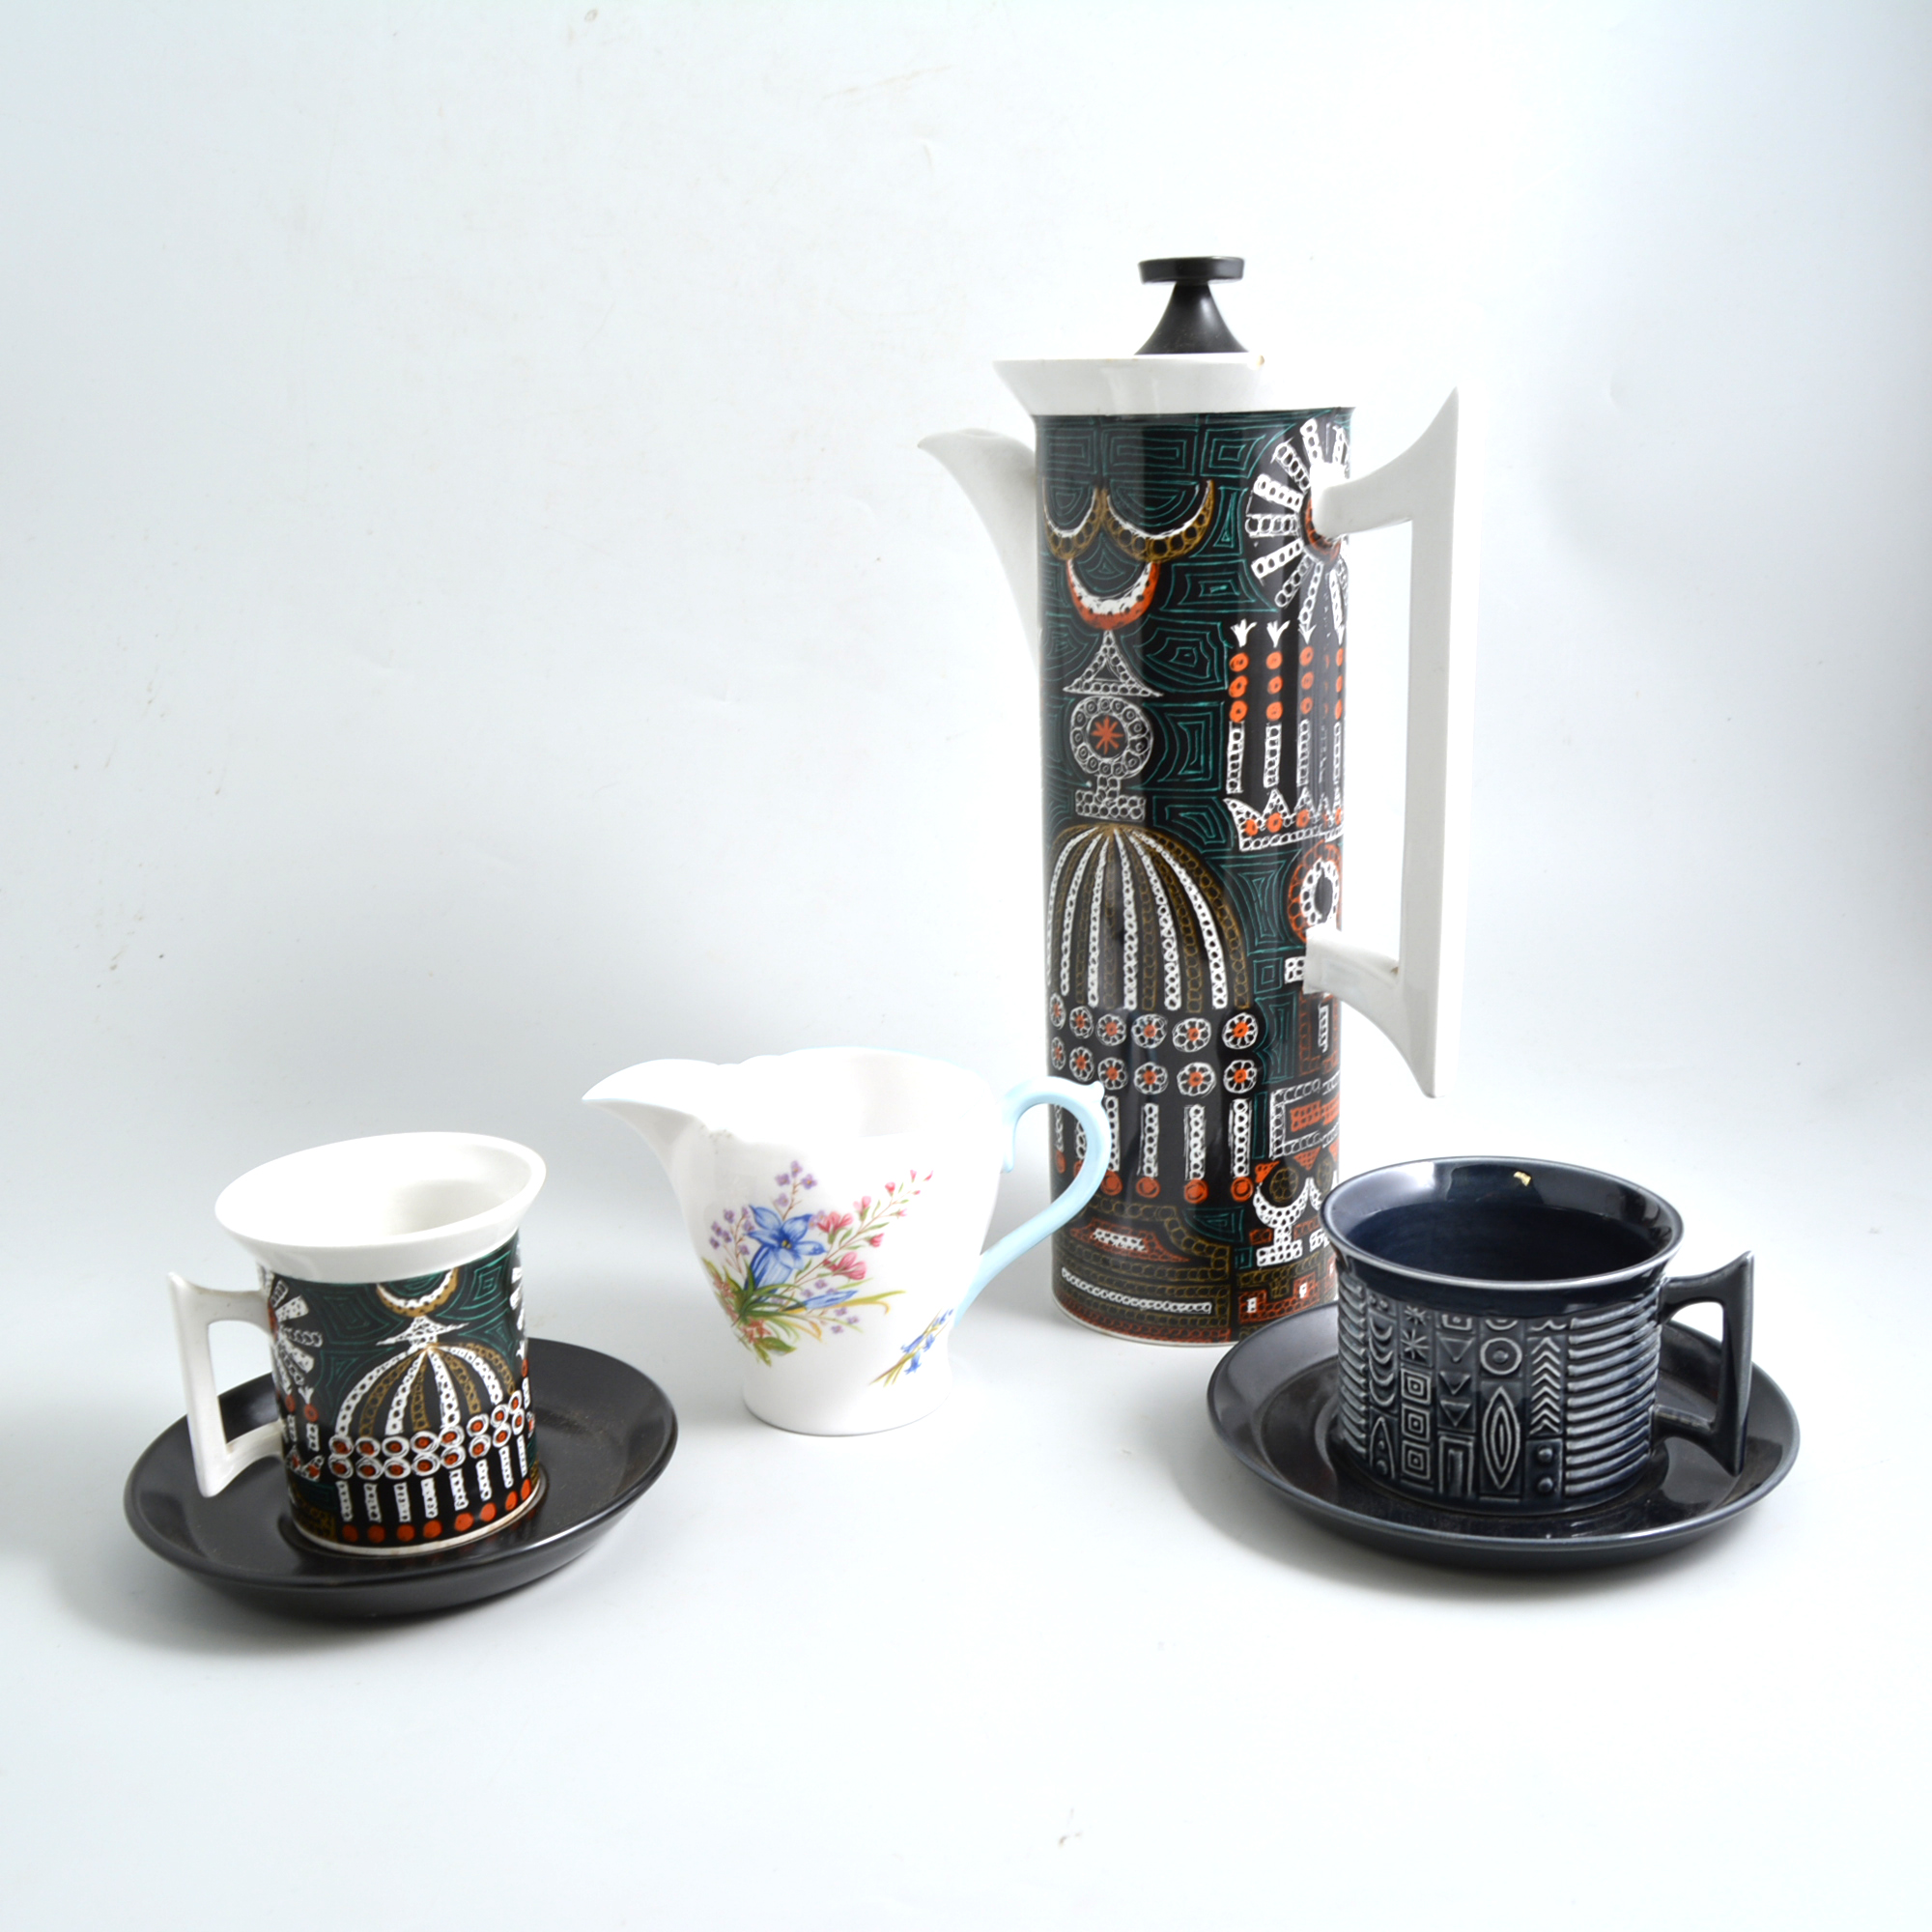 Shelley part tea service, 'Wild Flowers' design, including four trios, jug, bowl and cake plate,